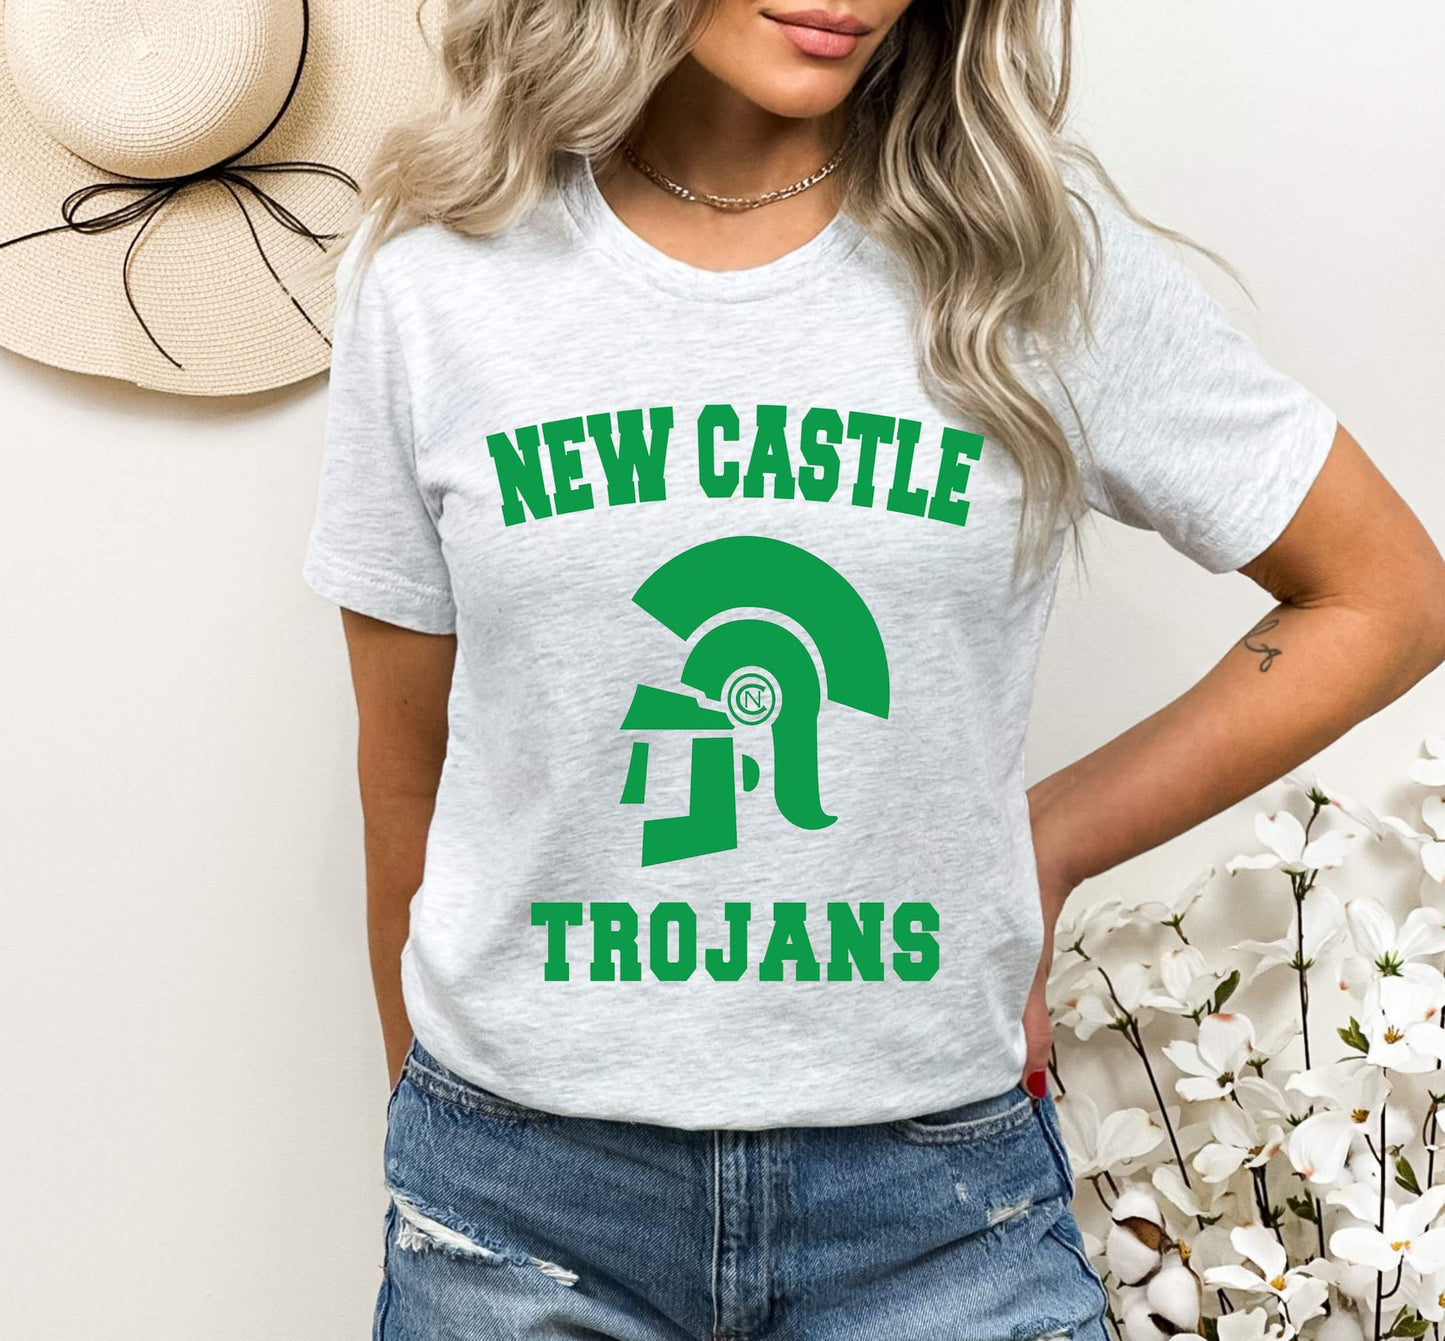 NC Trojans tee, sweatshirt preorder (youth available)